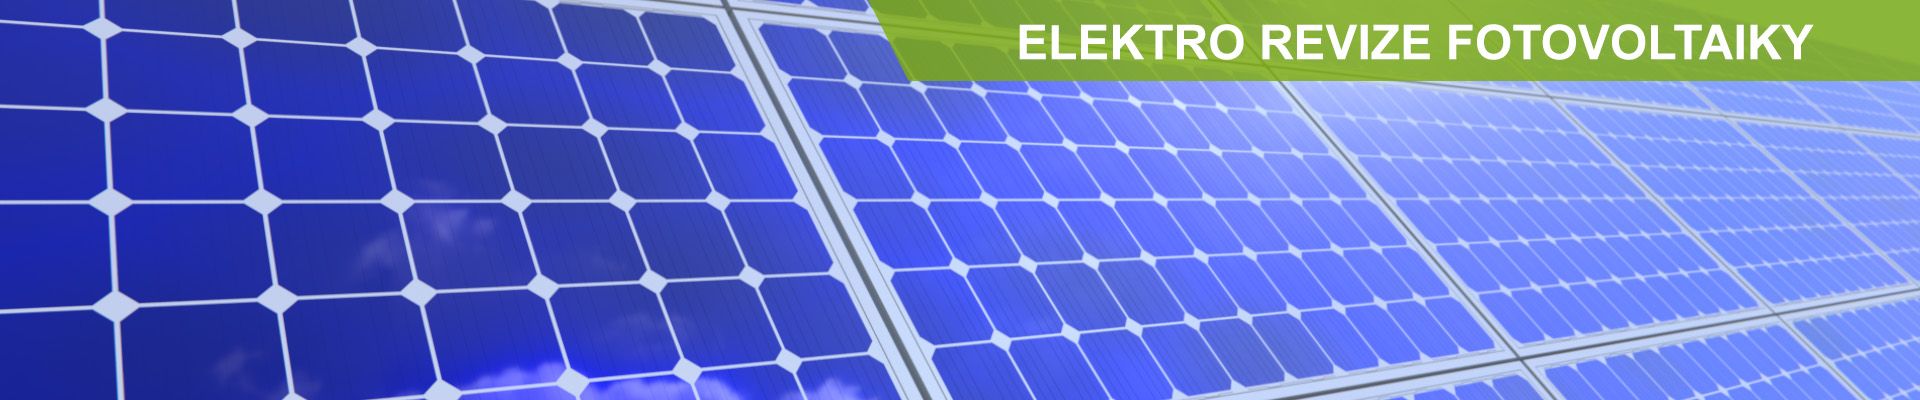 Elektro revize fotovoltaiky